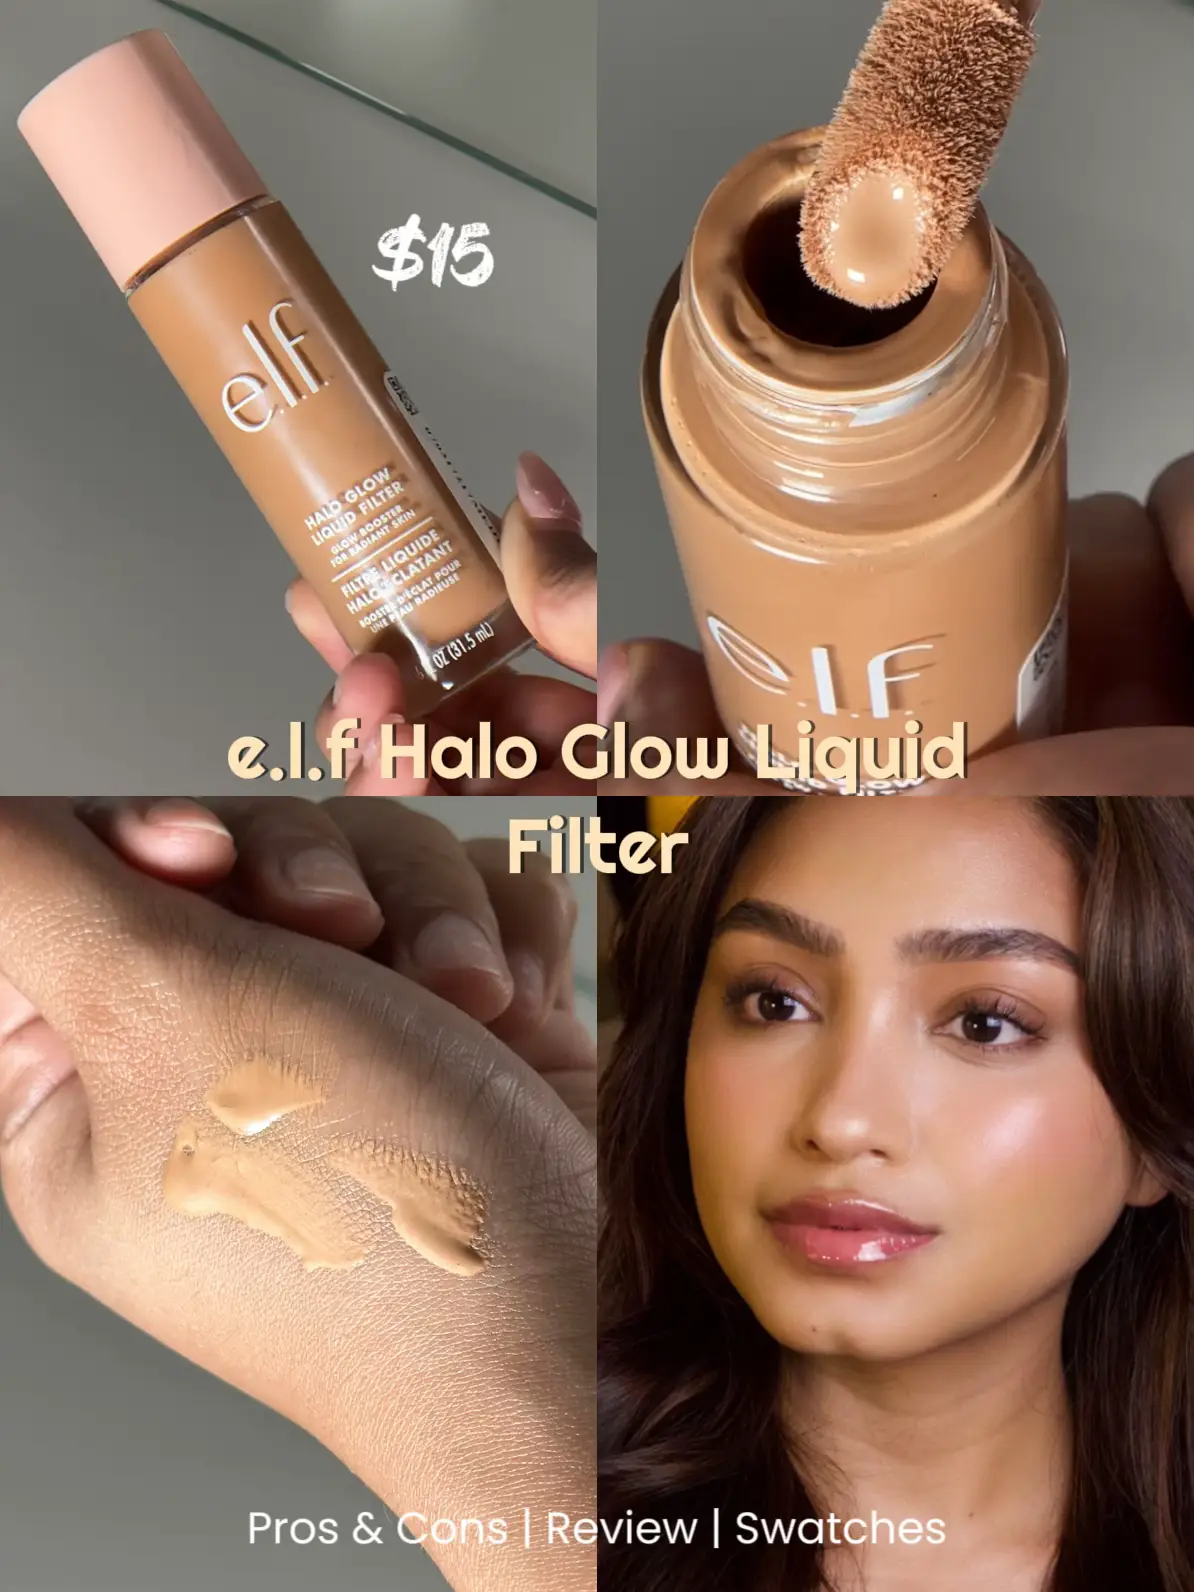 E.l.f Cosmetics Halo Glow Liquid Filter review